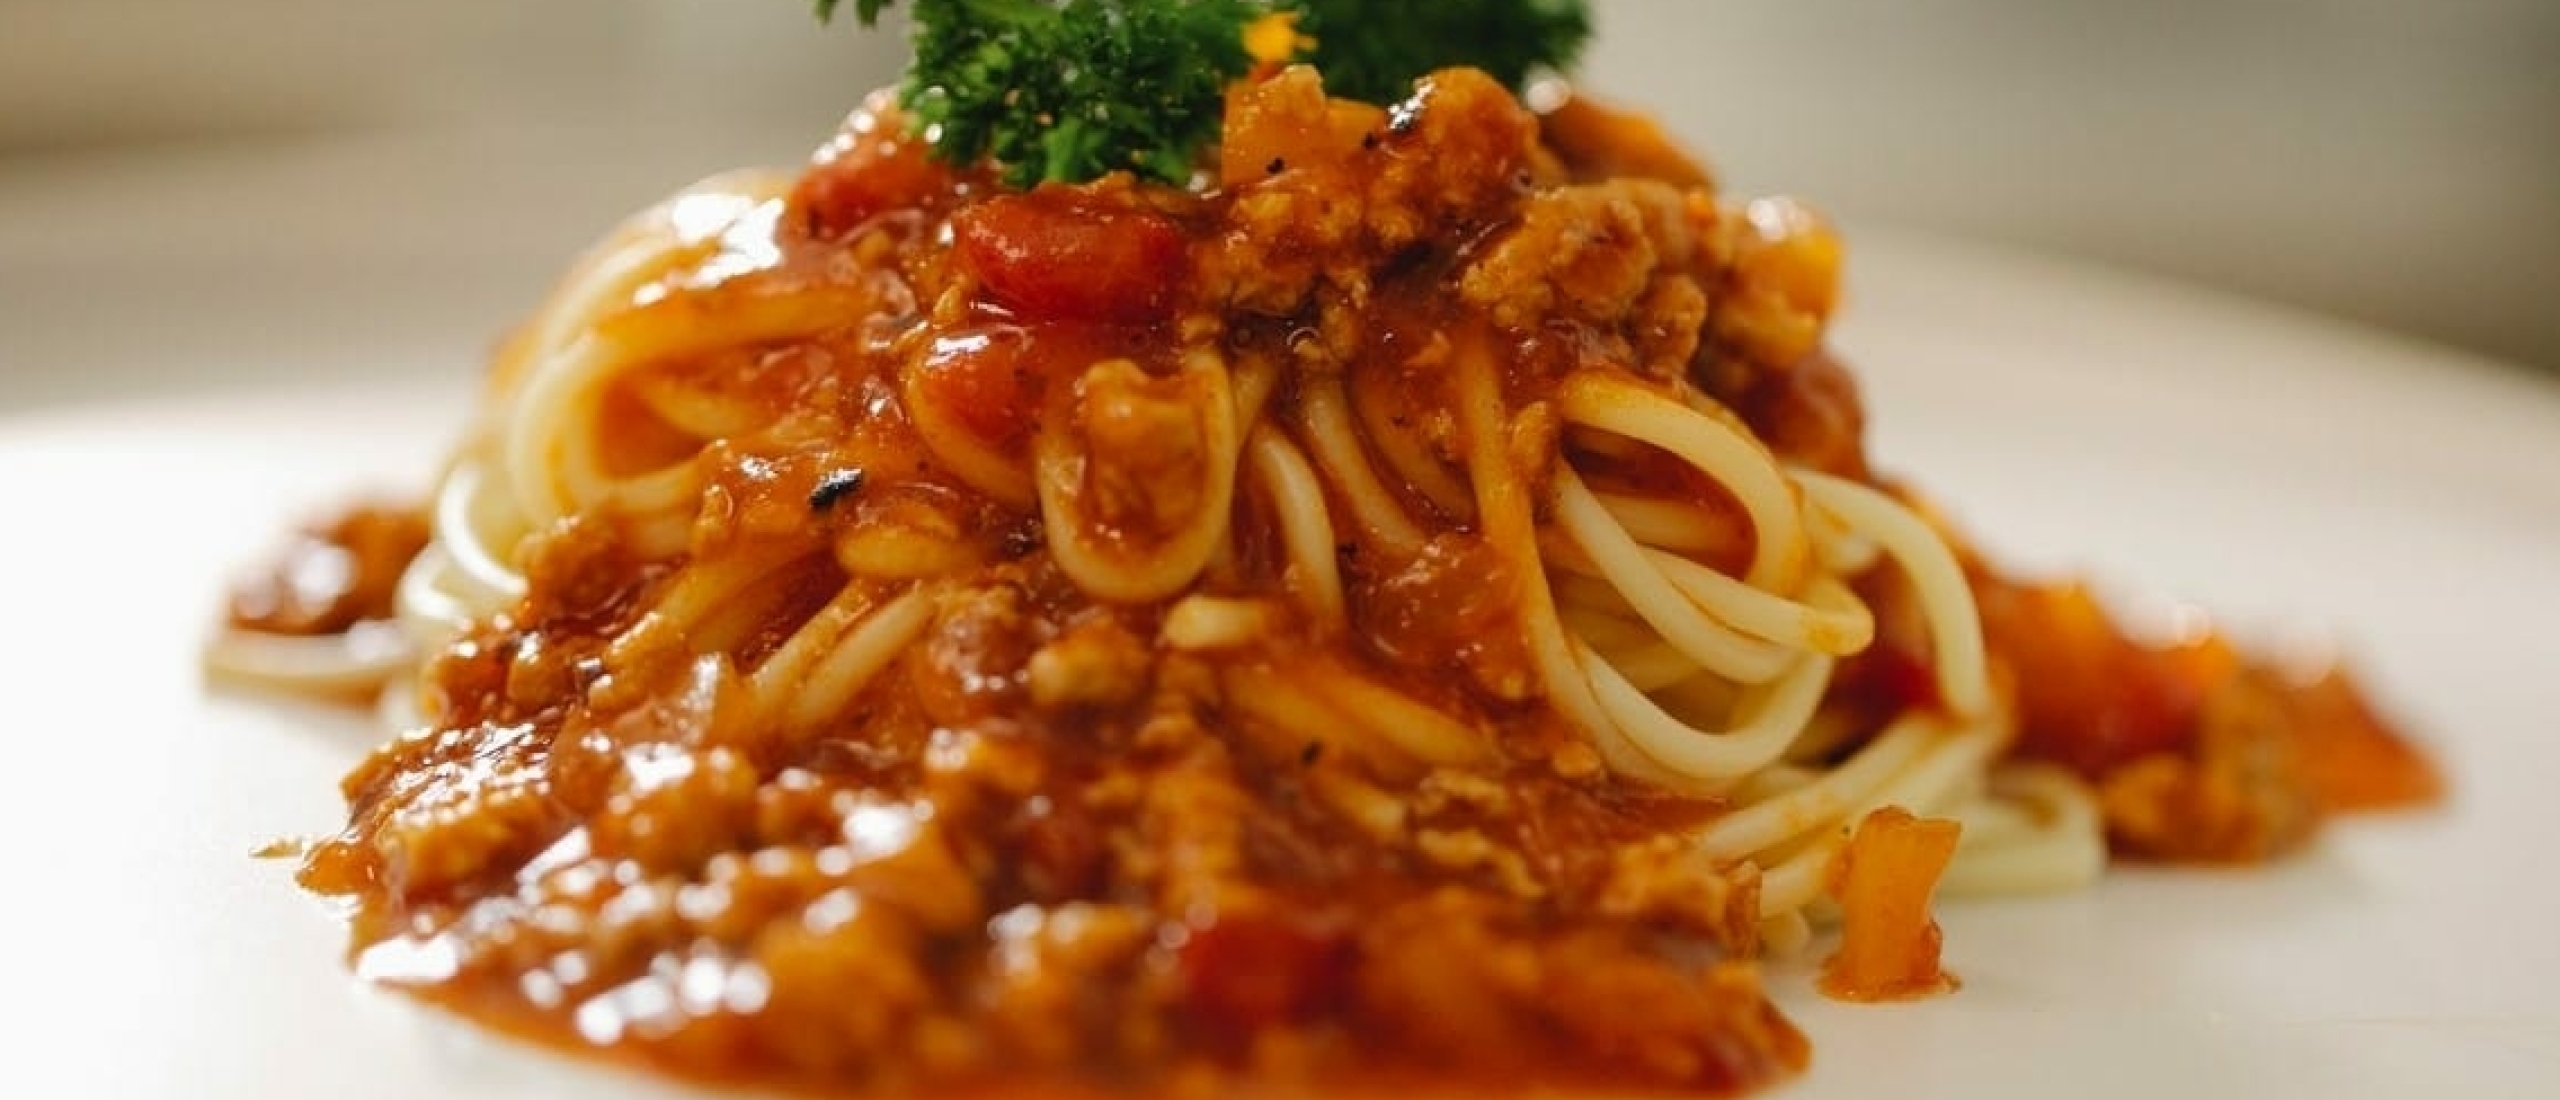 Vegan spaghetti bolognese (espaguetis boloñesa veganos)